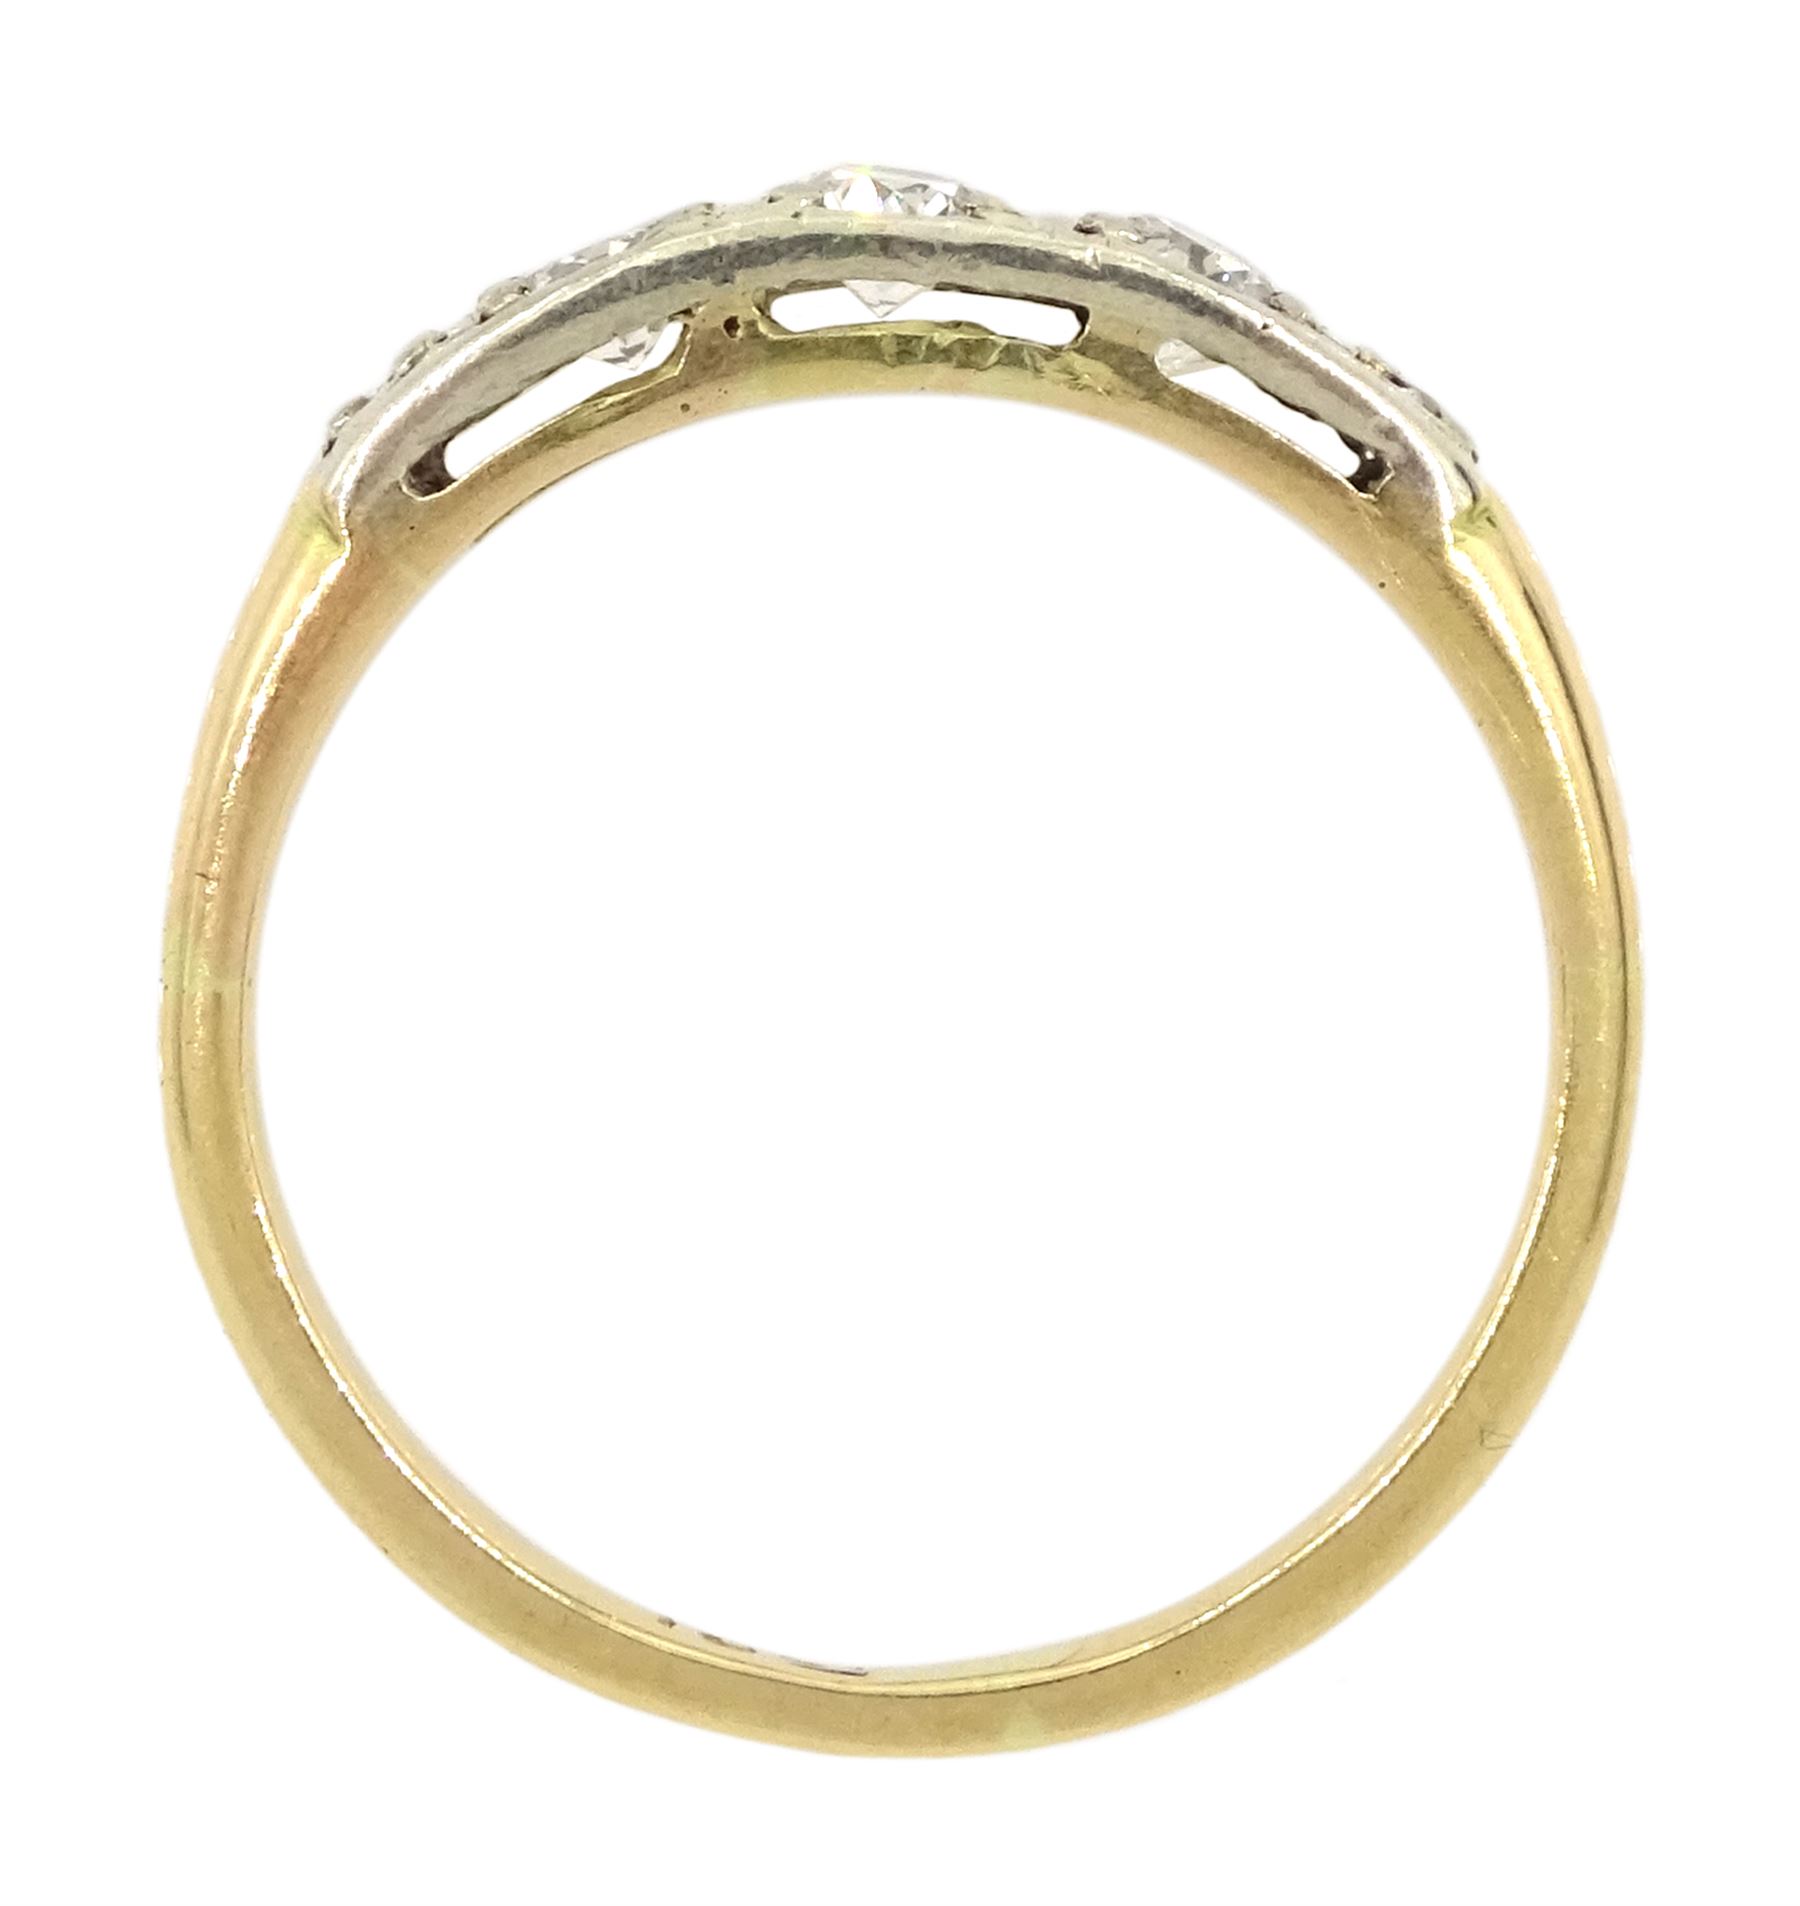 Gold five stone graduating round brilliant cut diamond ring - Image 5 of 5